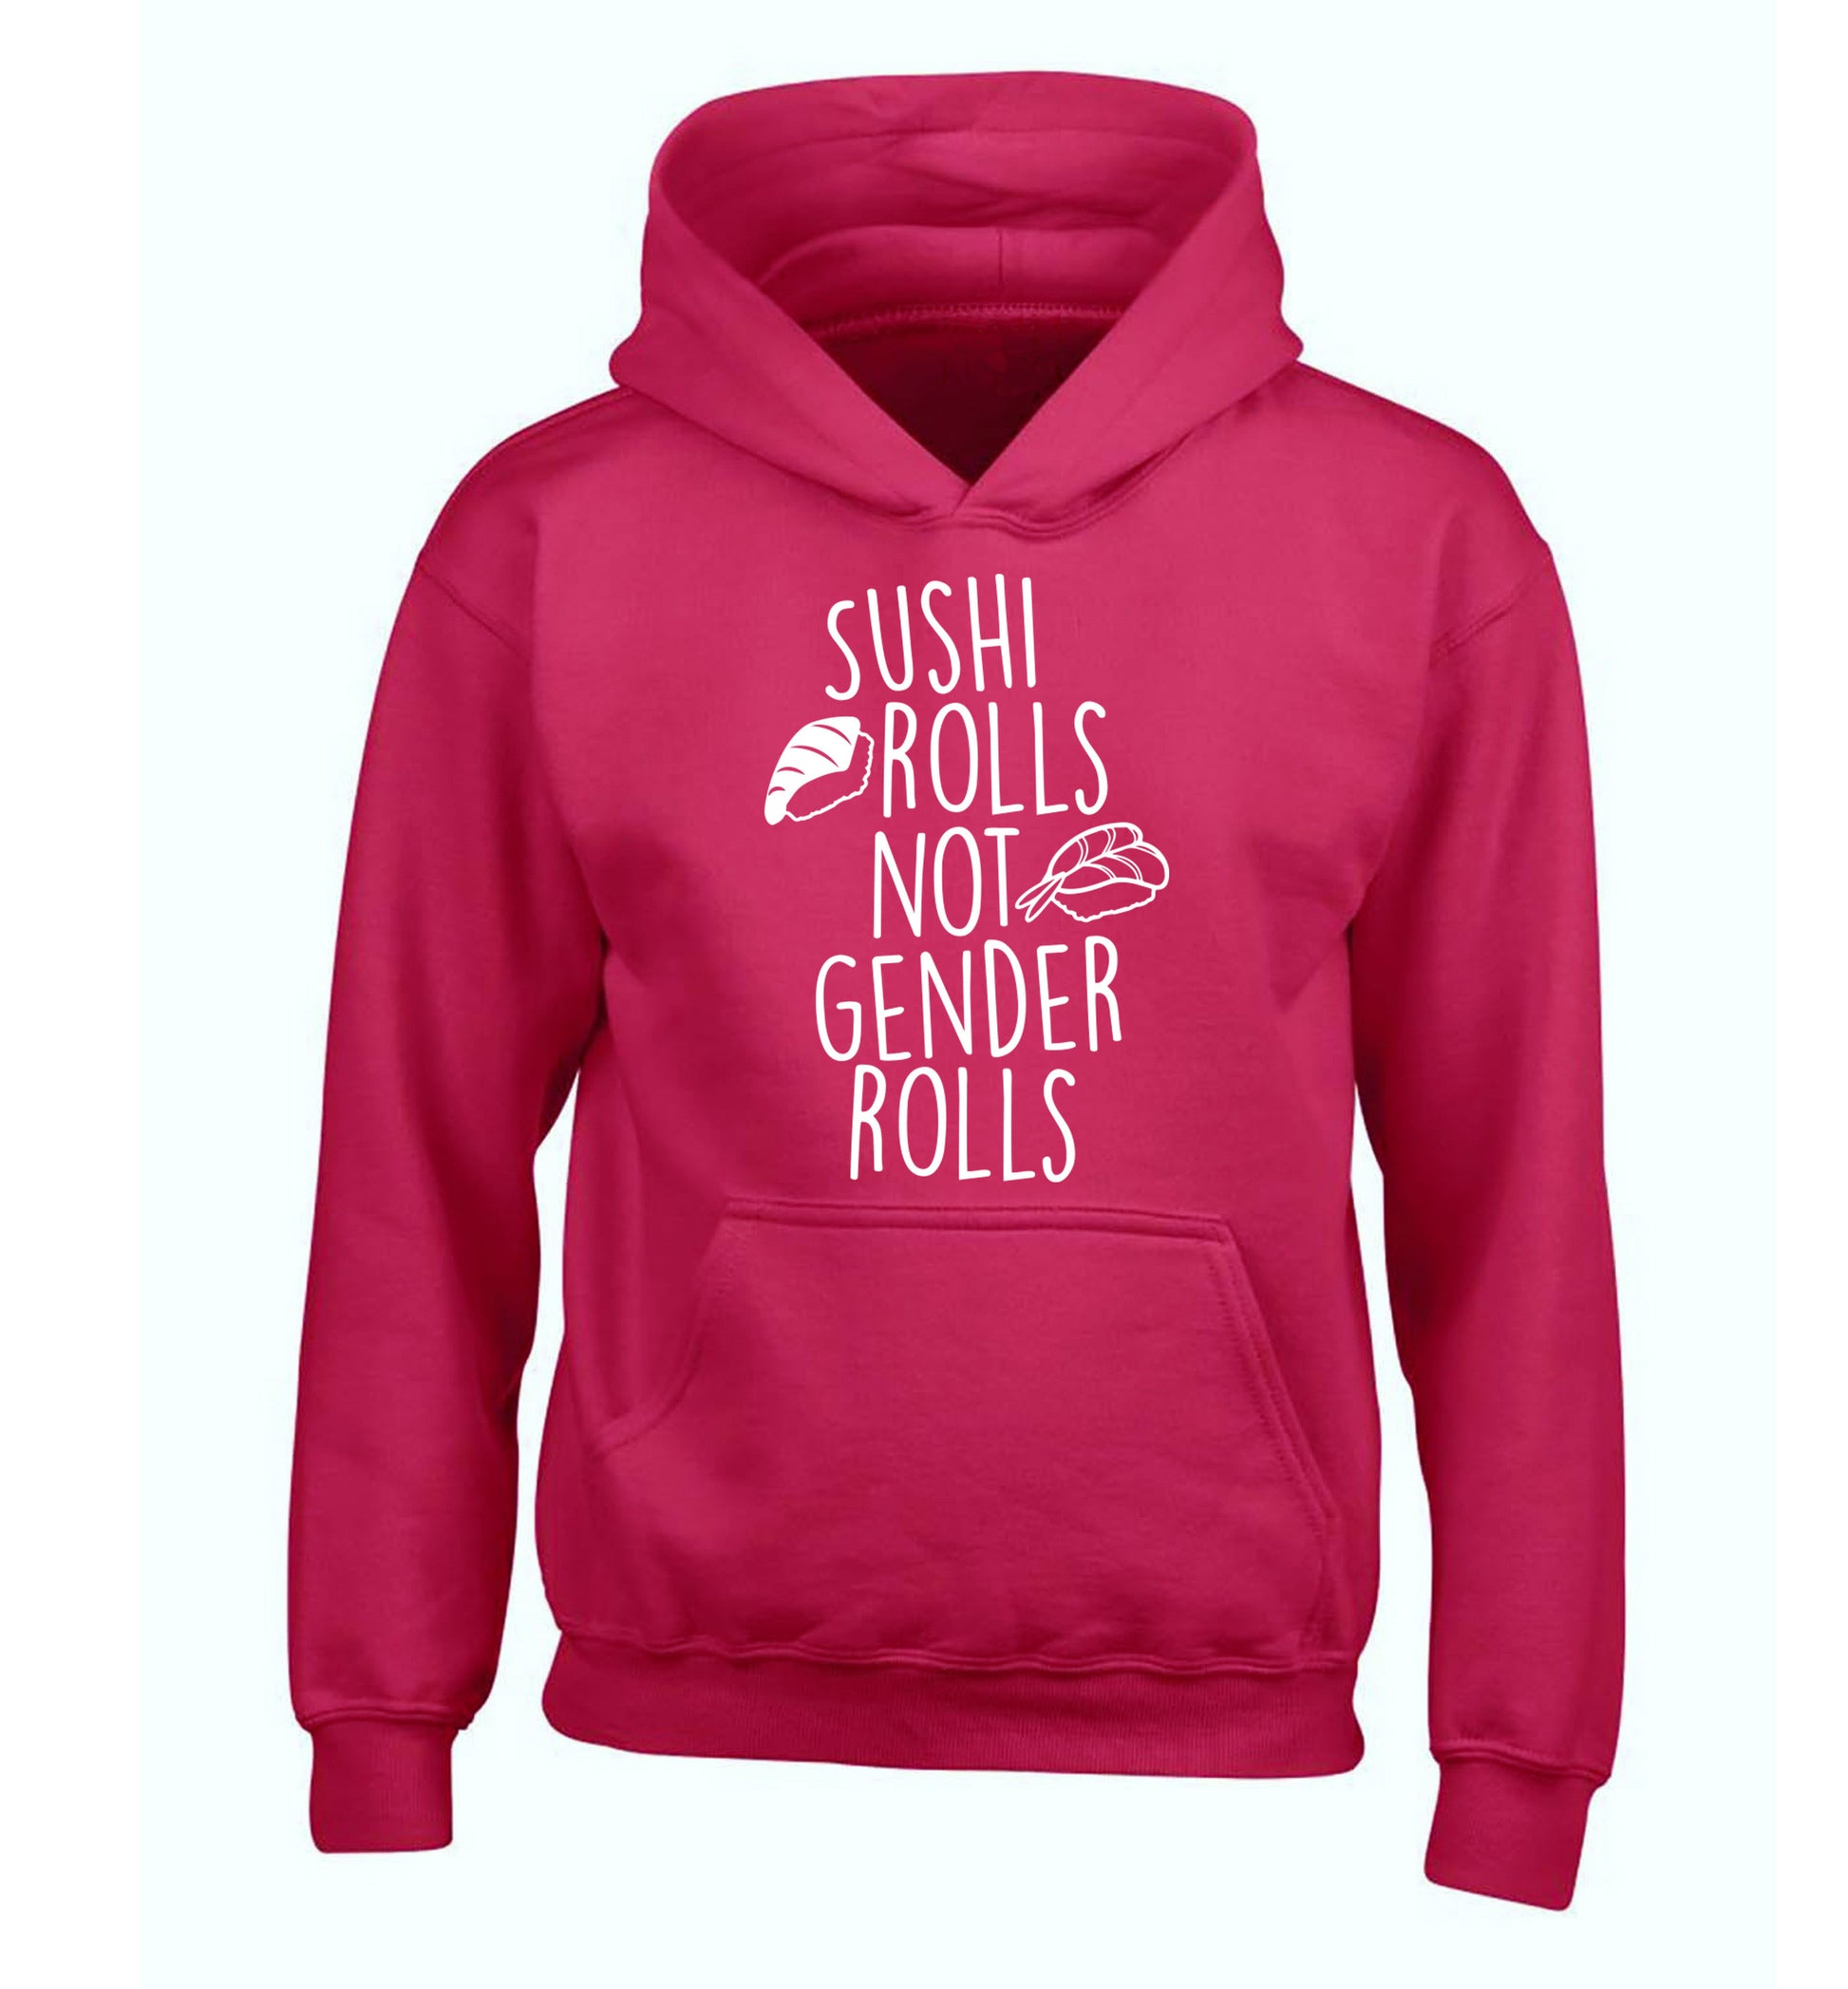 Sushi rolls not gender rolls children's pink hoodie 12-14 Years